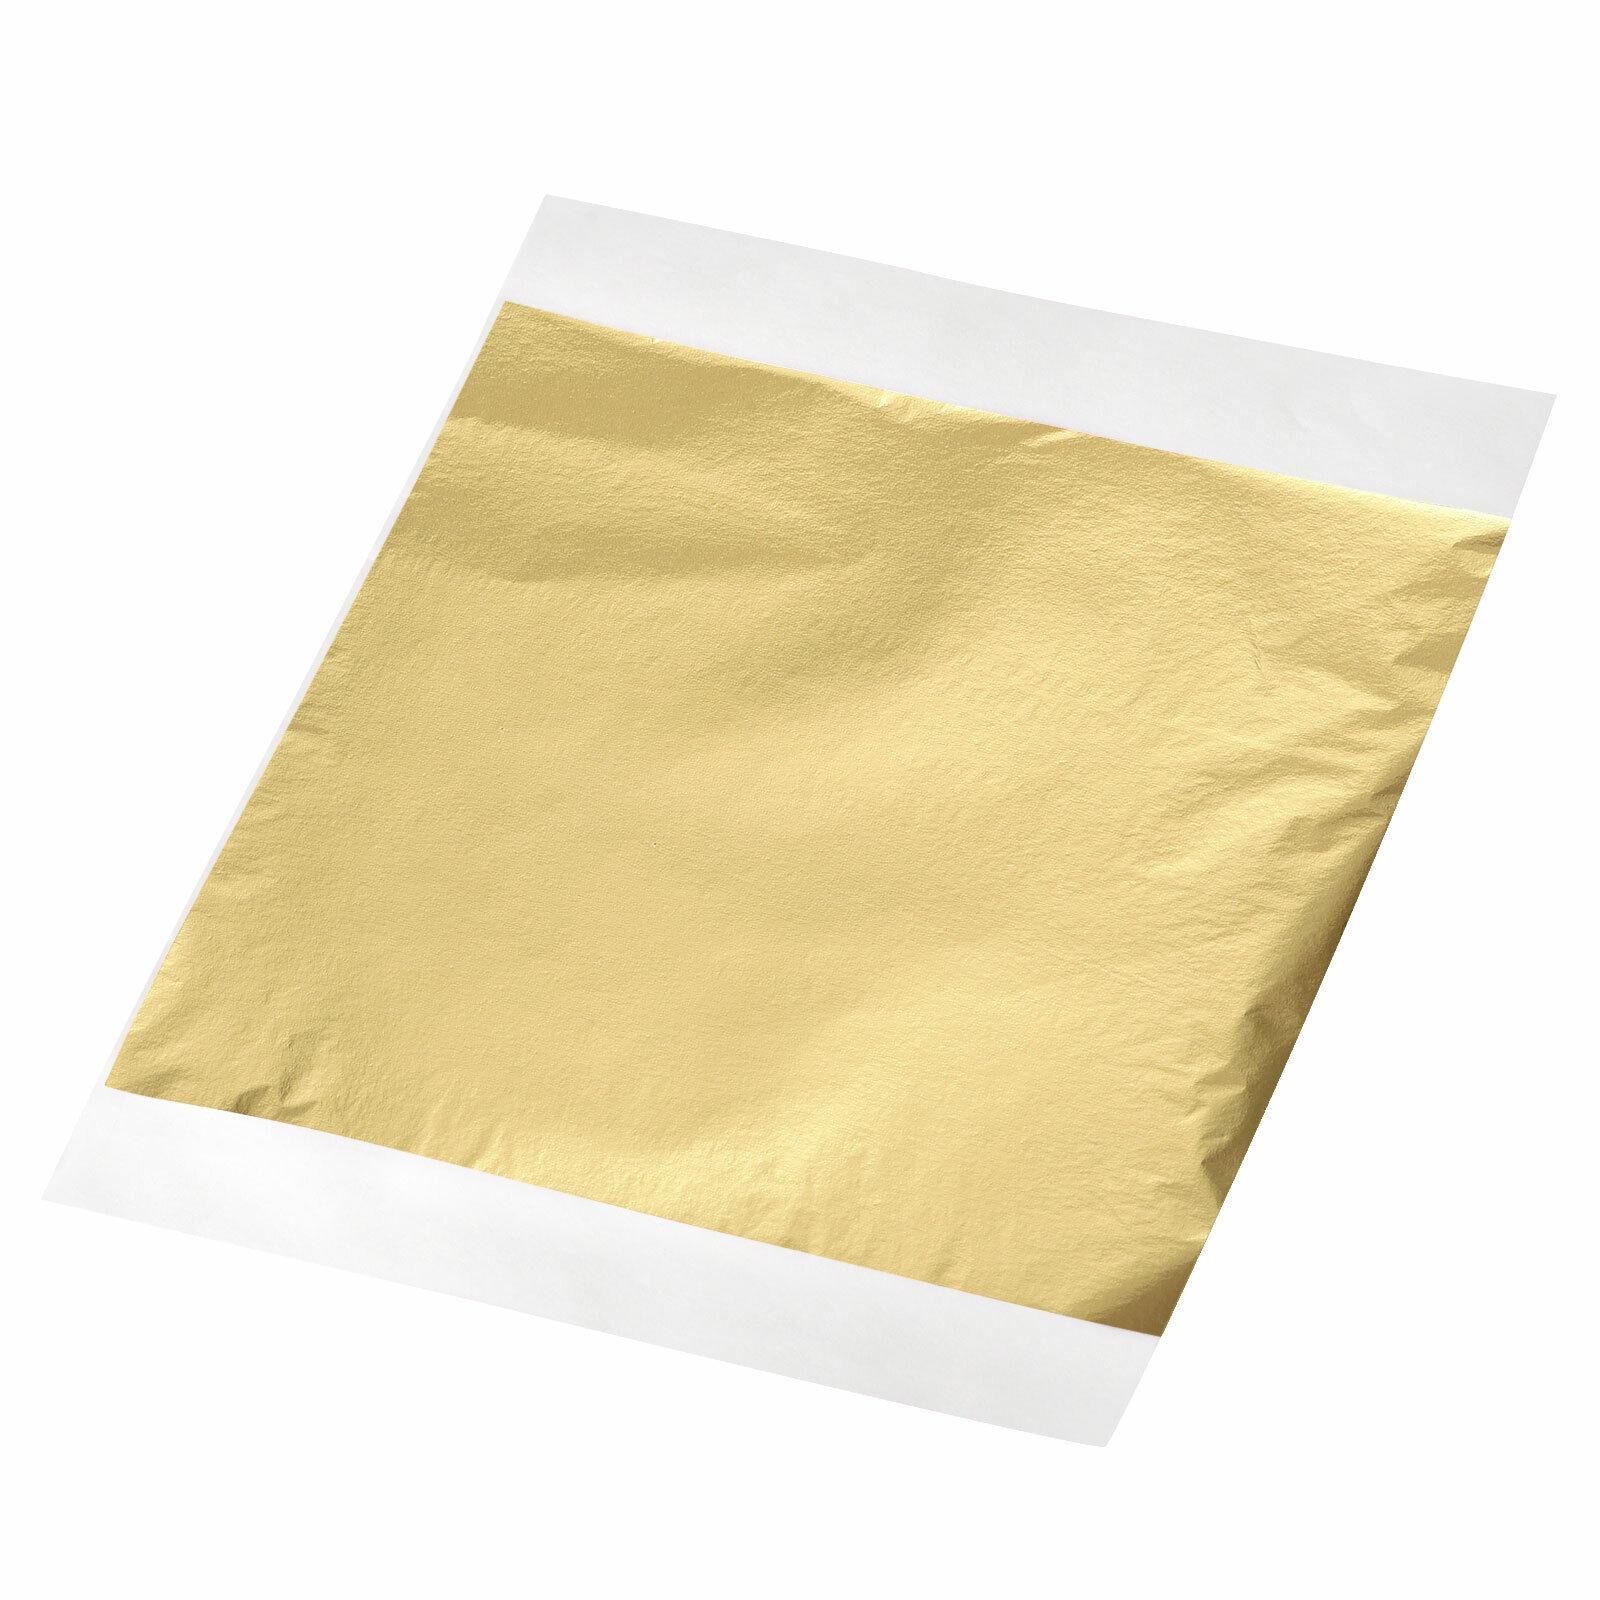 Foil Sheet, Golden Leaf Papers, 5.3 X 5.1inch For Art Decoration, 100pcs